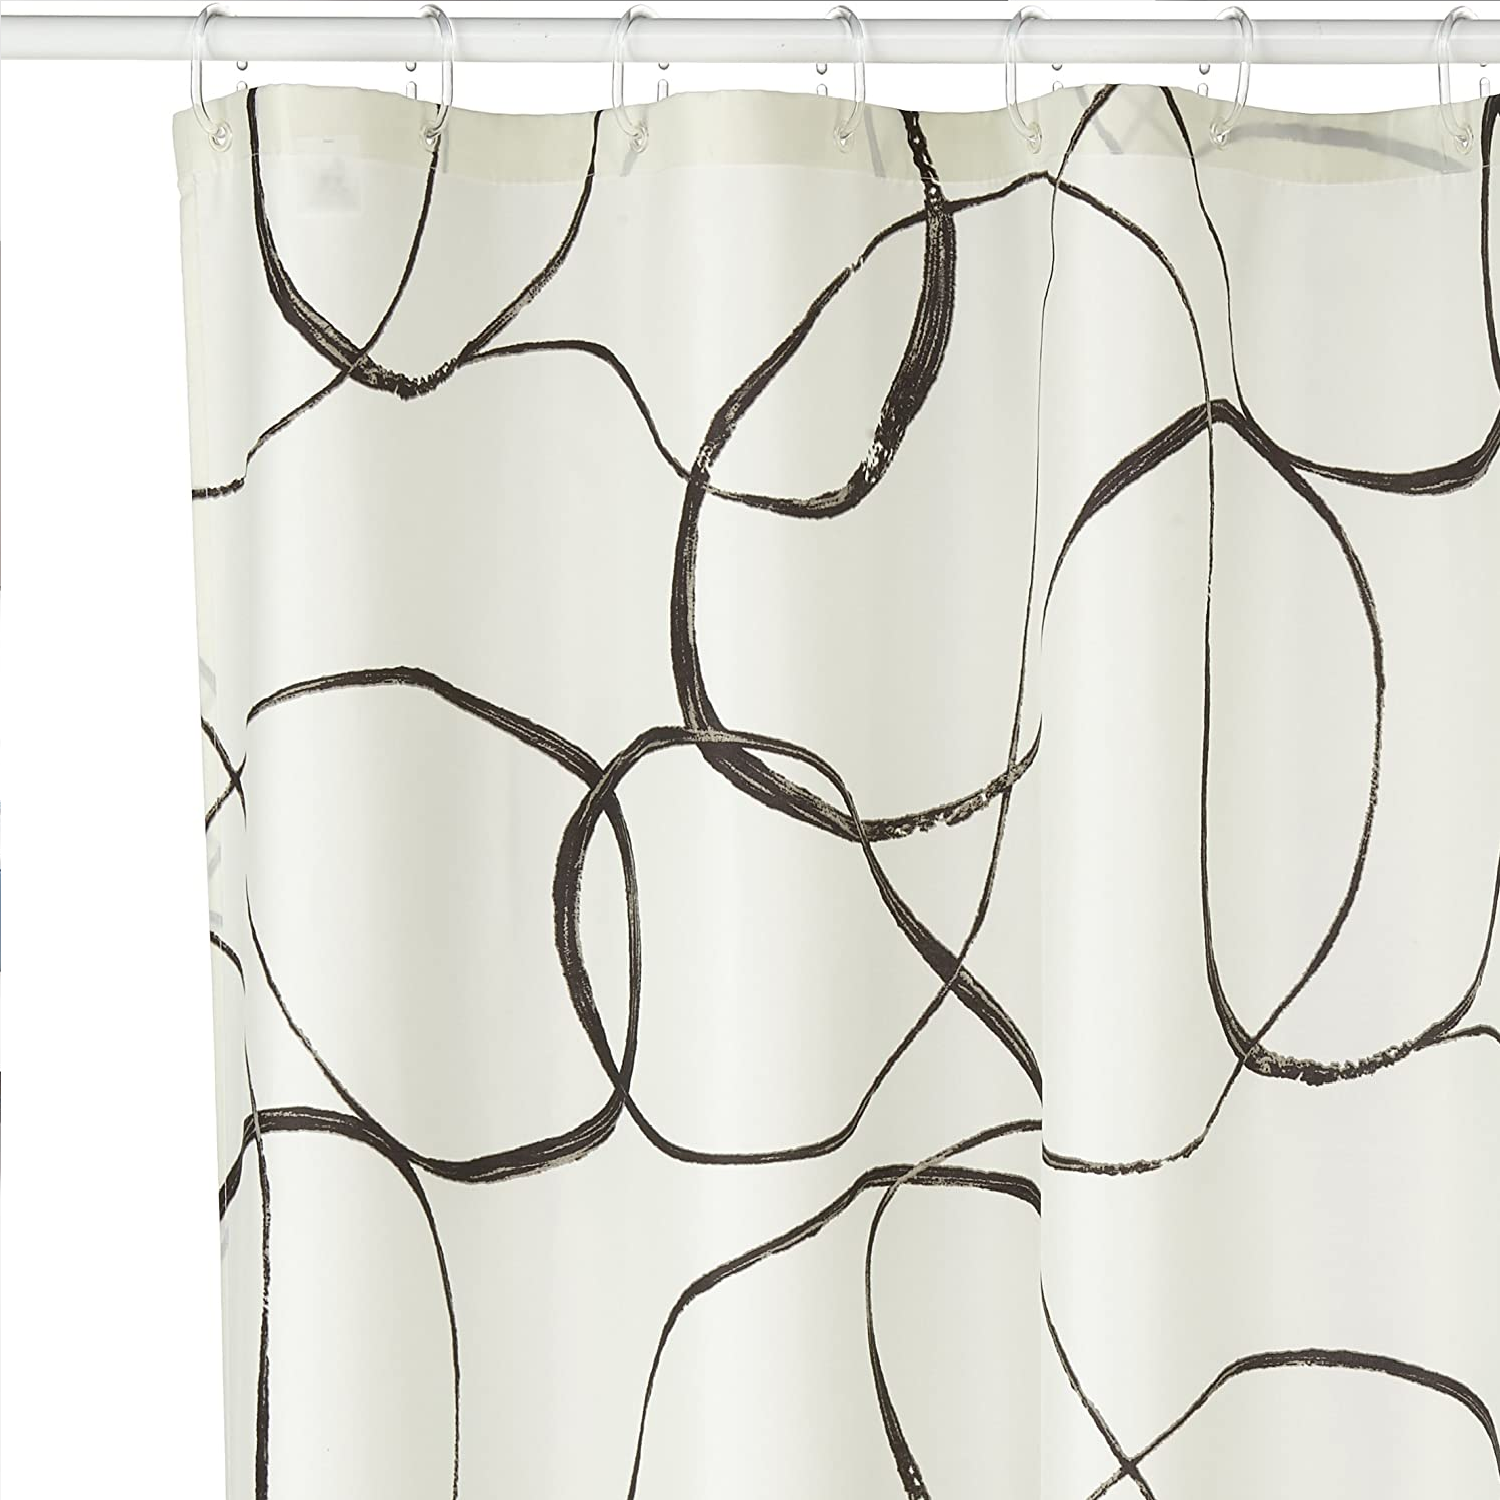 Textil Duschvorhang Movement, Farbe: Schwarz, B x H: 180 x 200 cm